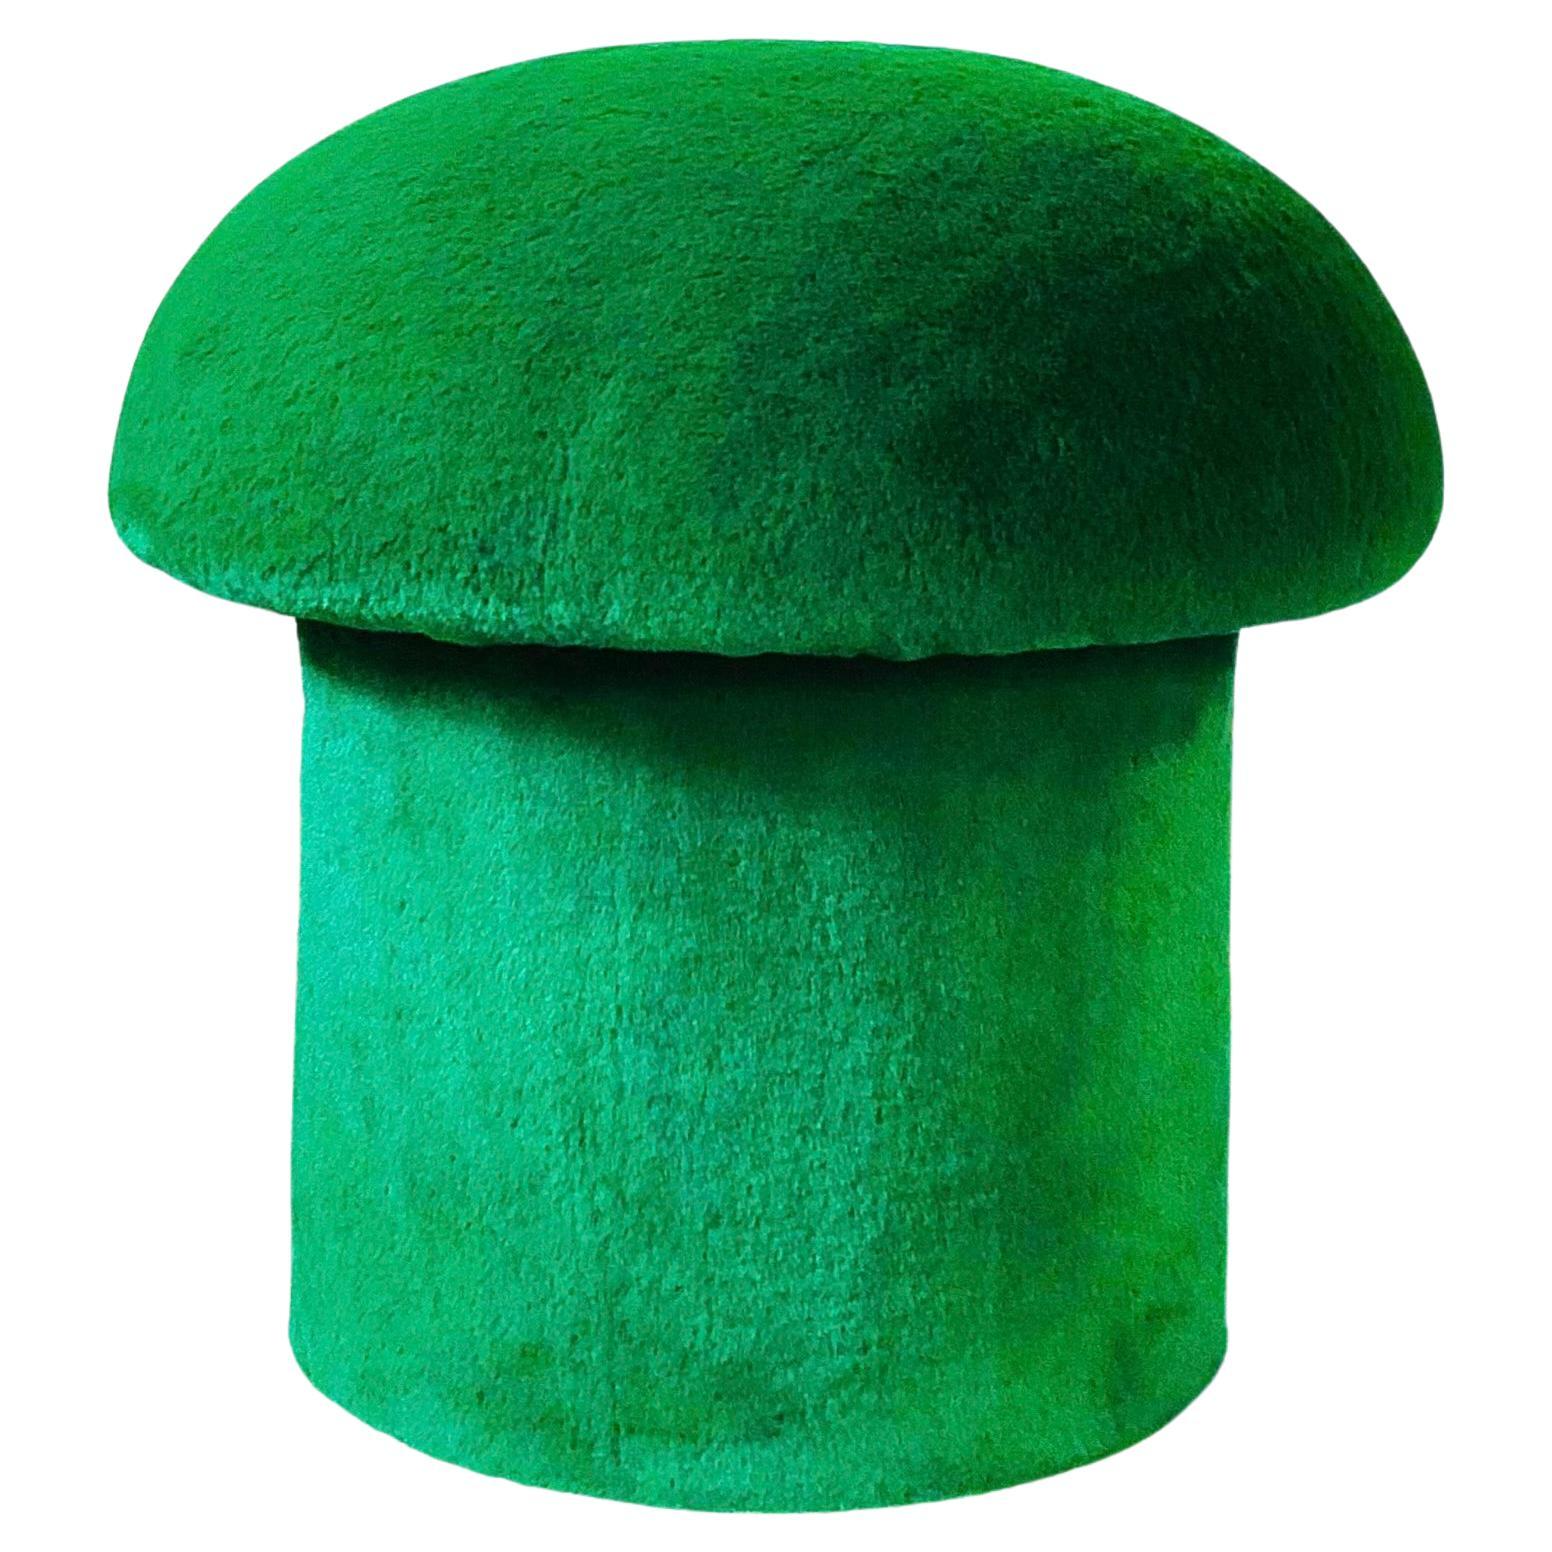 Mushroom Ottoman in Emerald Plush